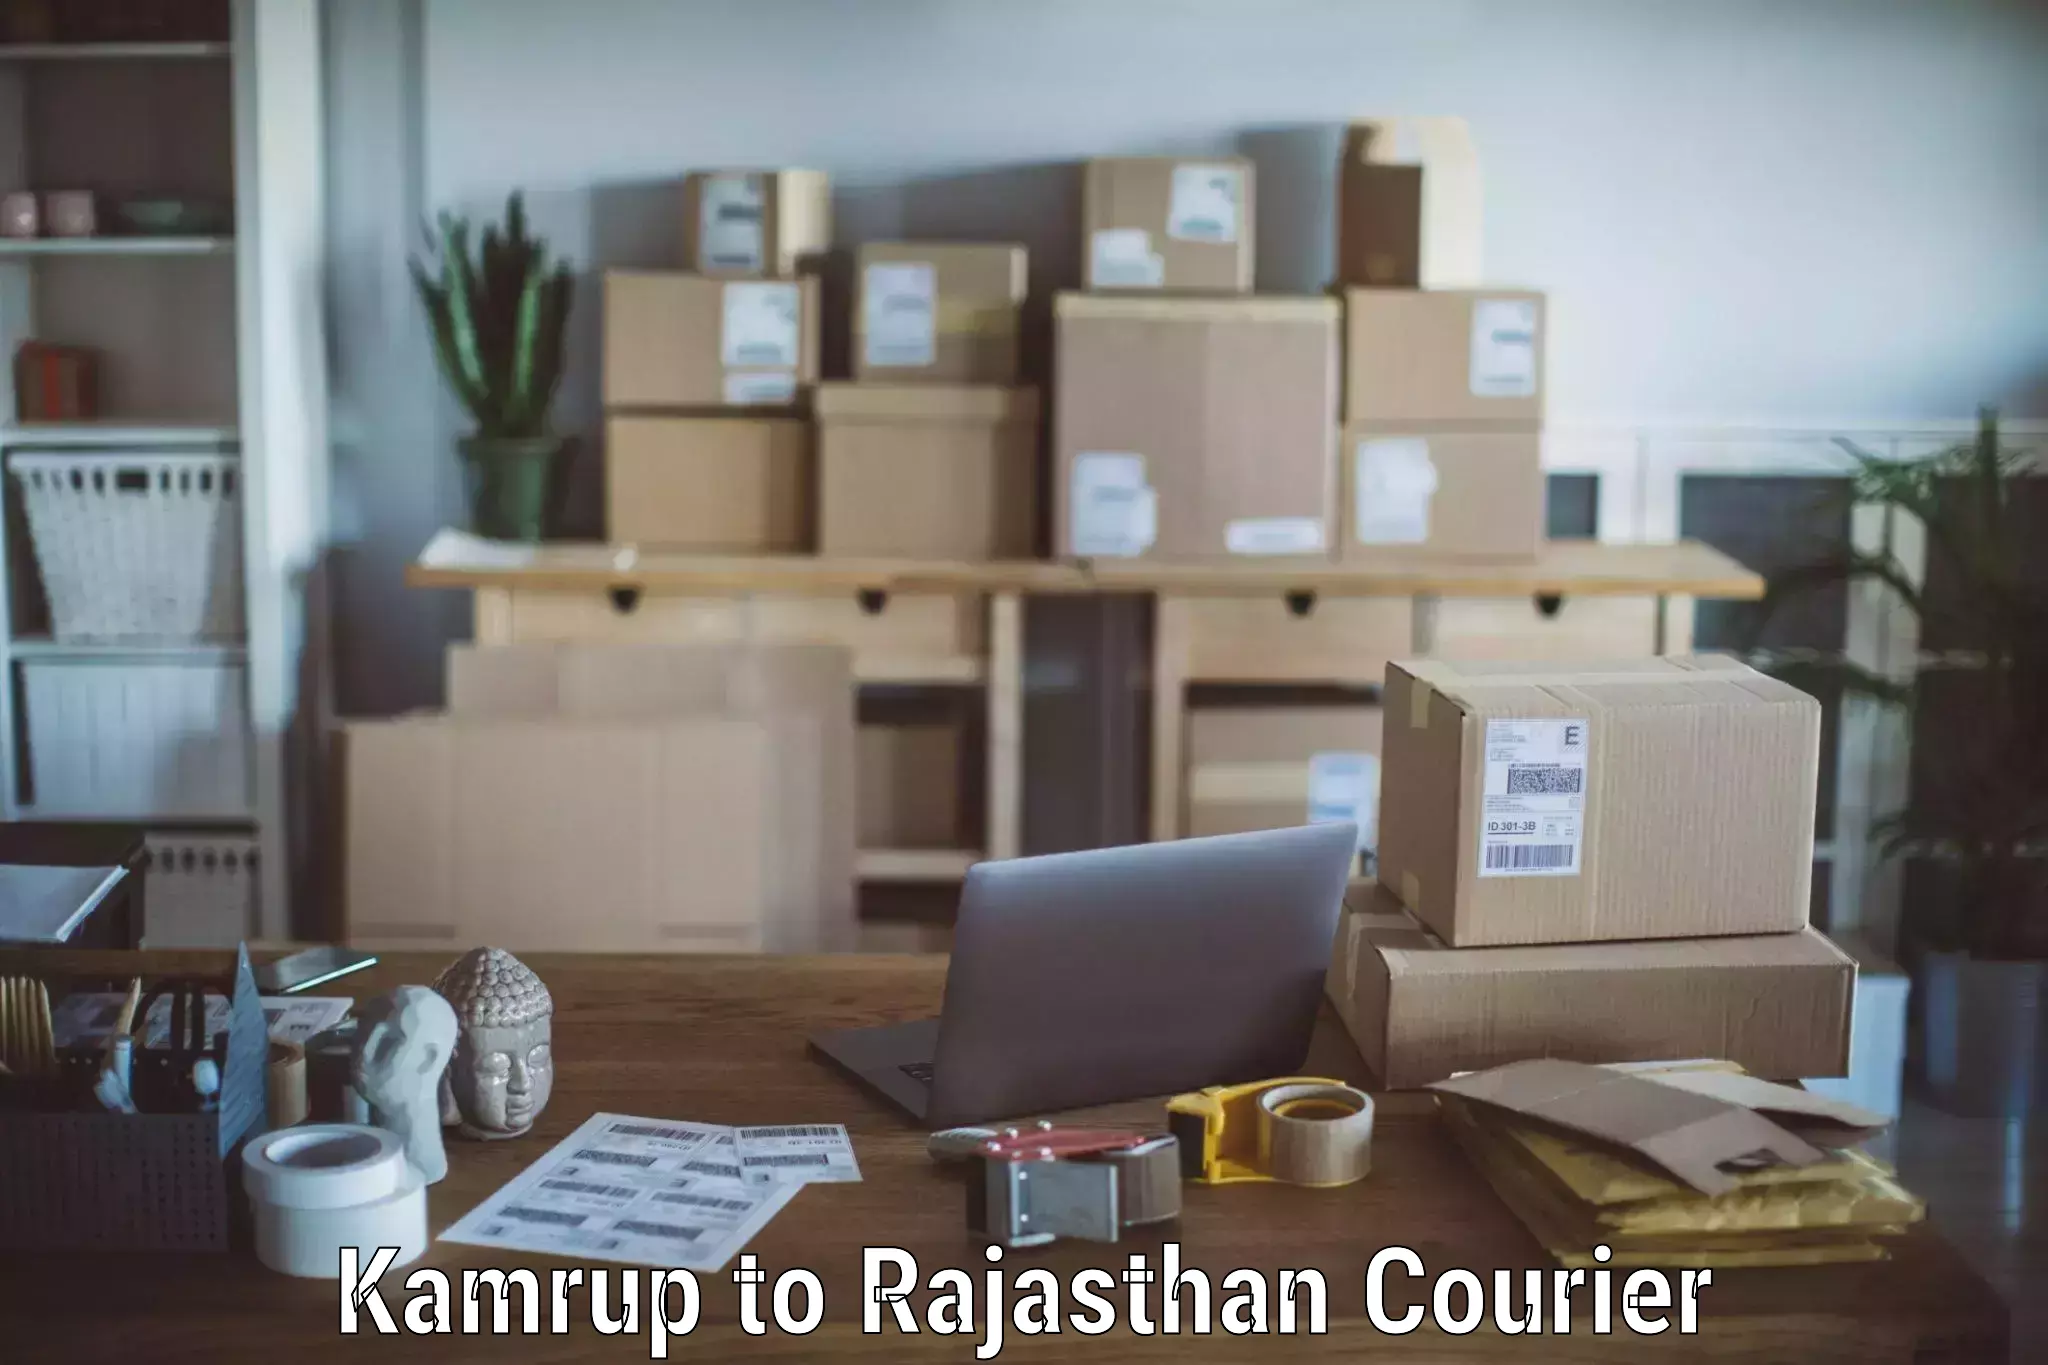 Professional moving company Kamrup to Falna